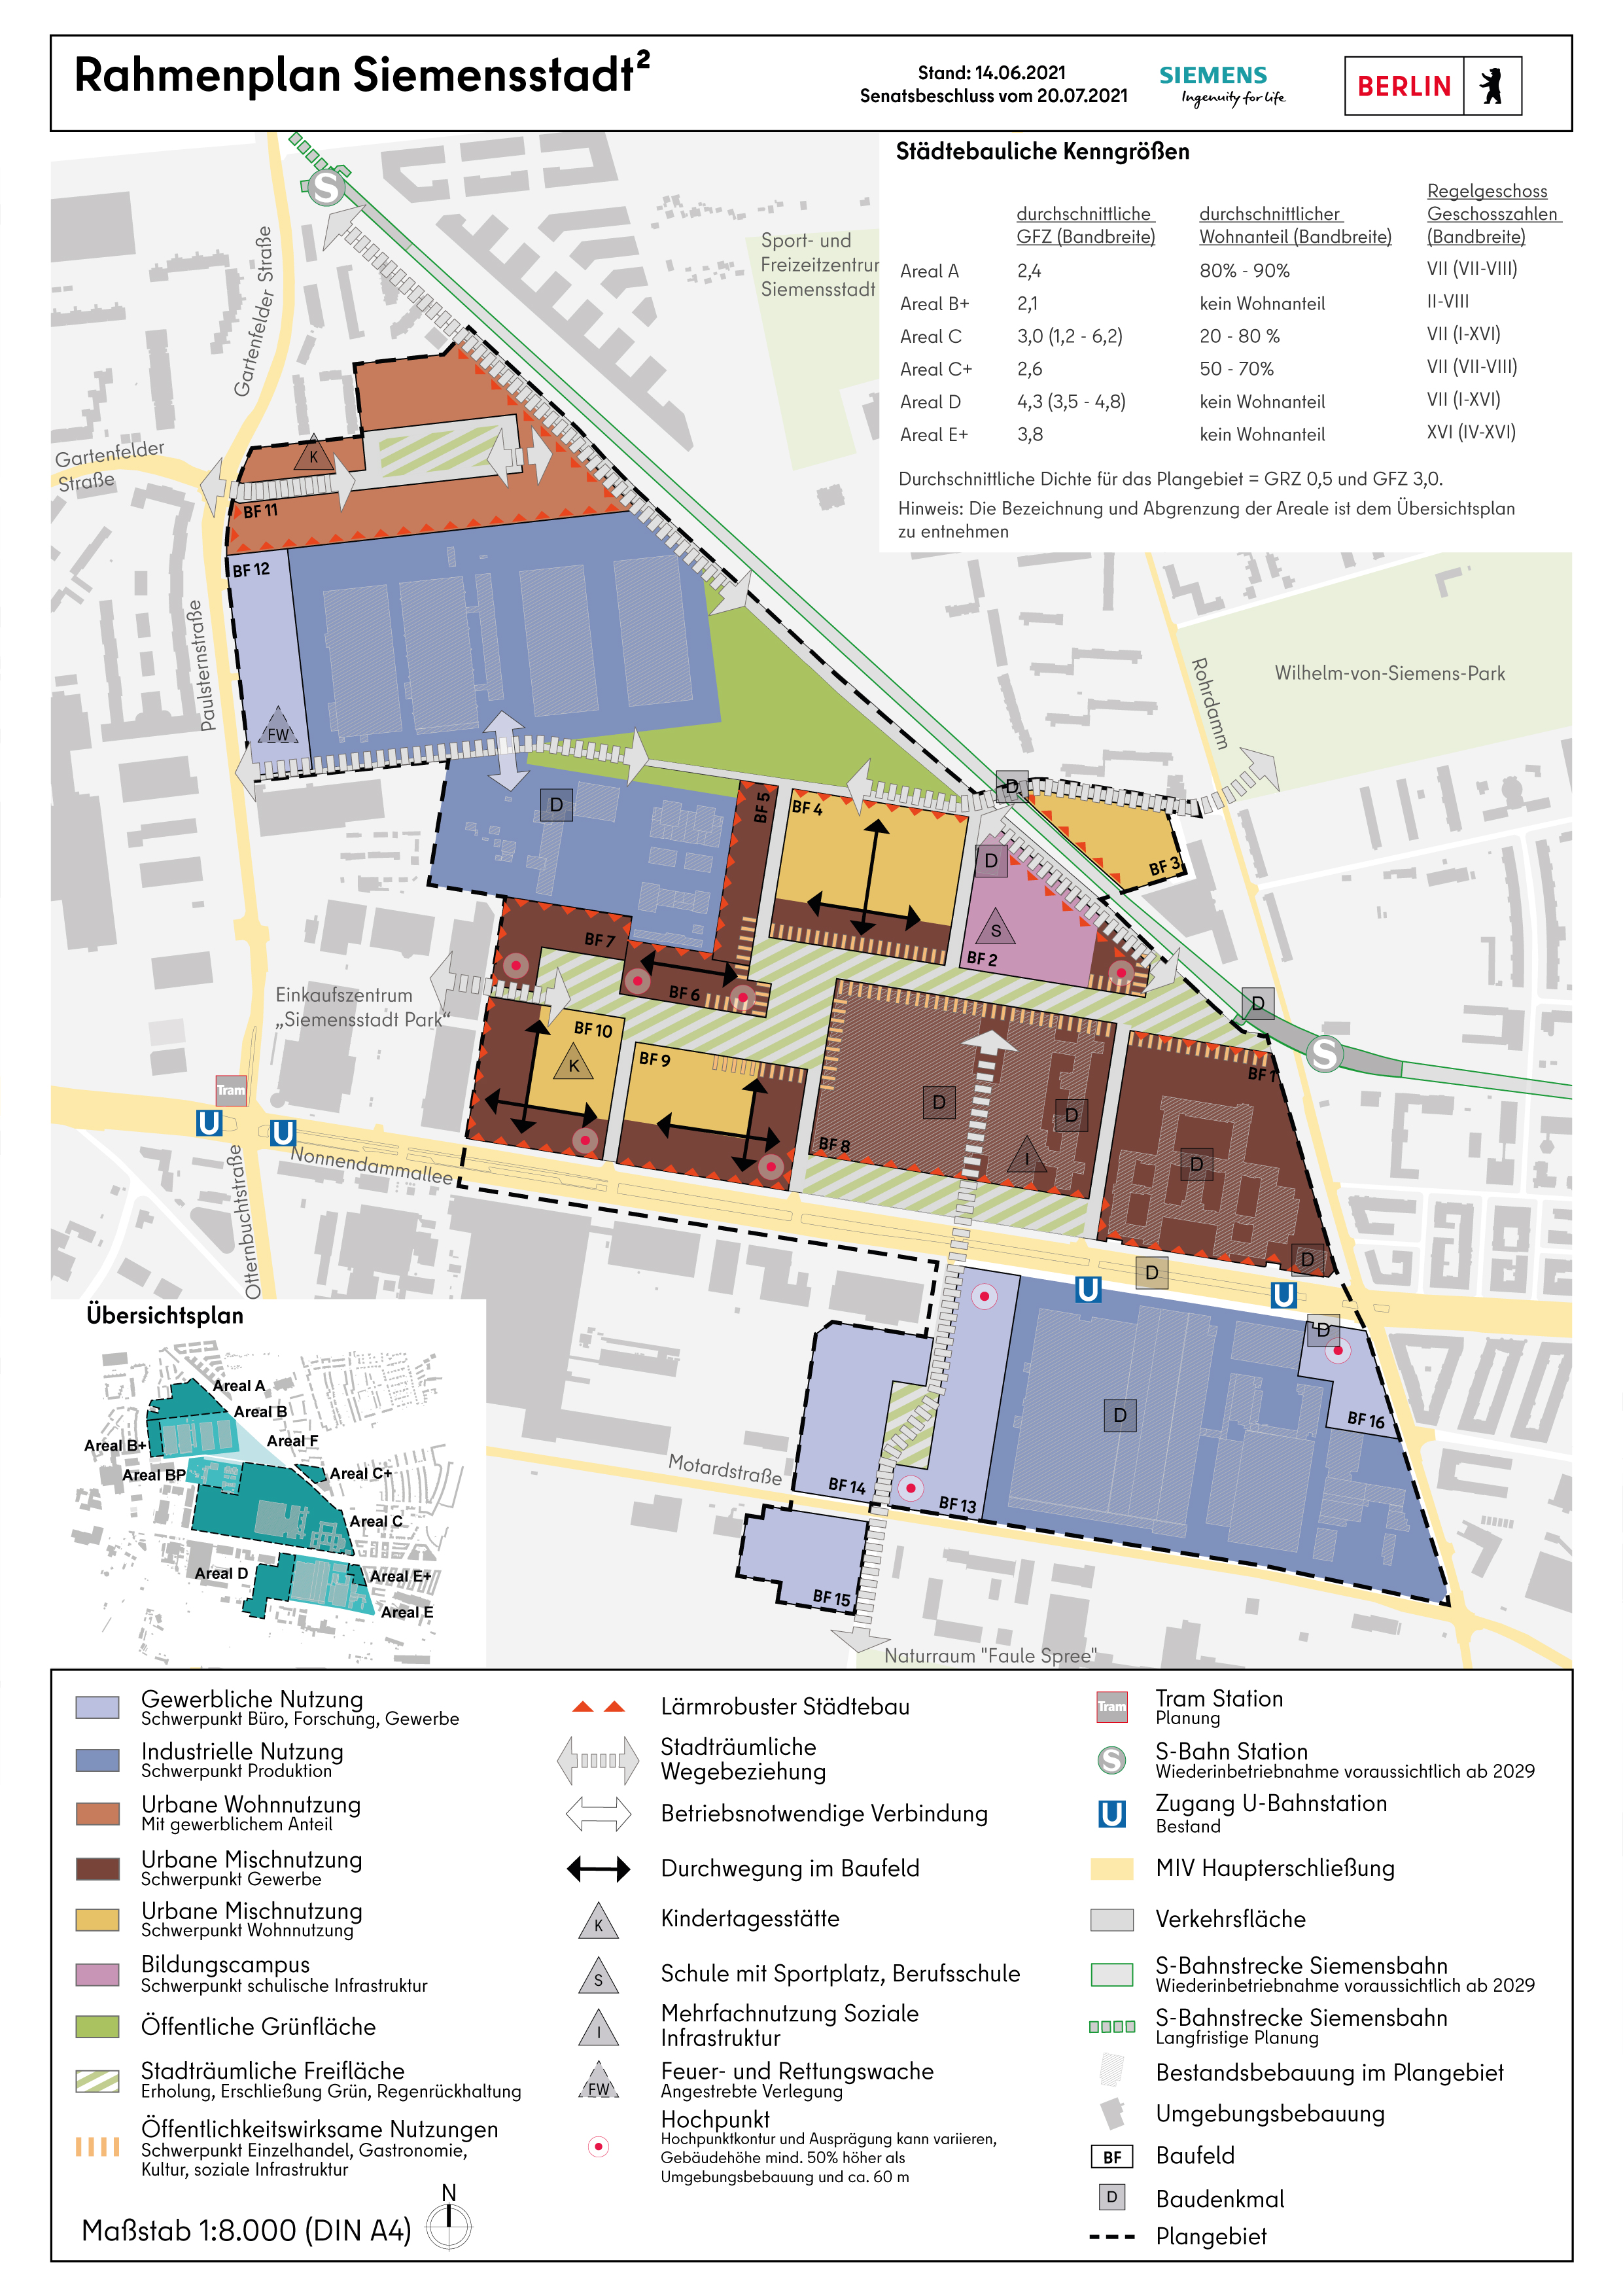 Rahmenplan Siemensstadt²